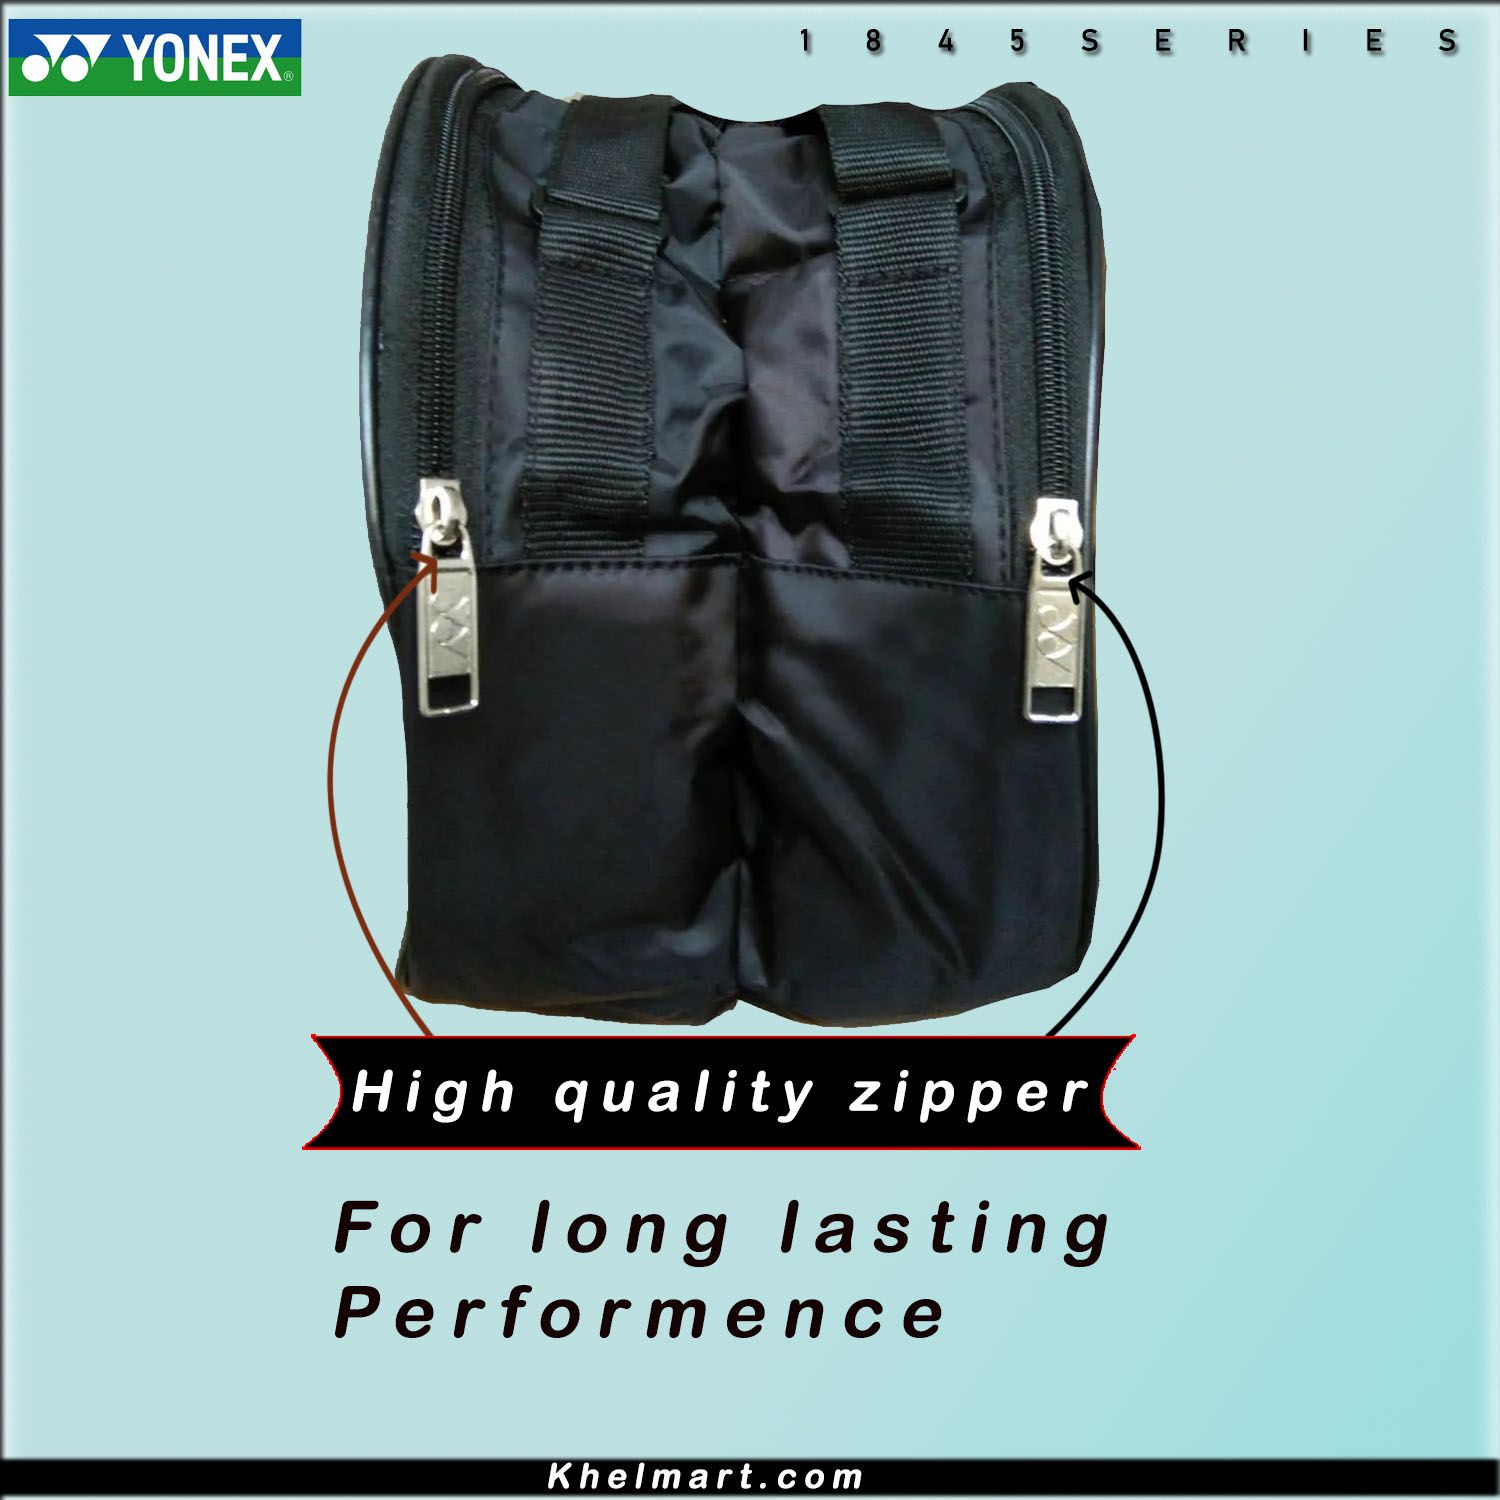 YONEX SUNR 1845 Thermal Badminton Kit Bag Black And Lime